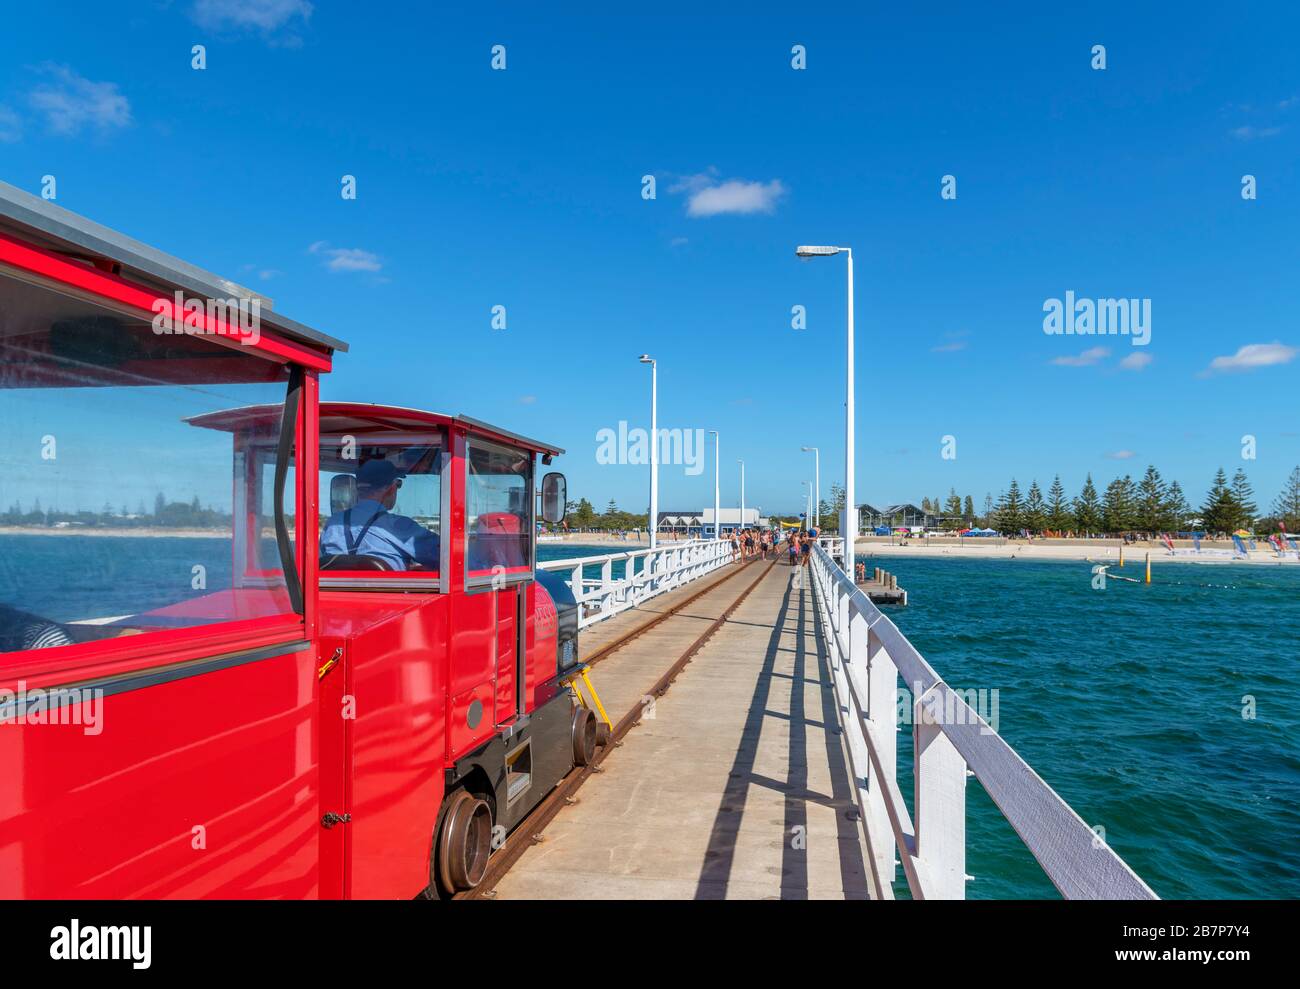 The Stockton Preston Express tourist train on Busselton Jetty, Busselton, Western Australia, Australia Stock Photo